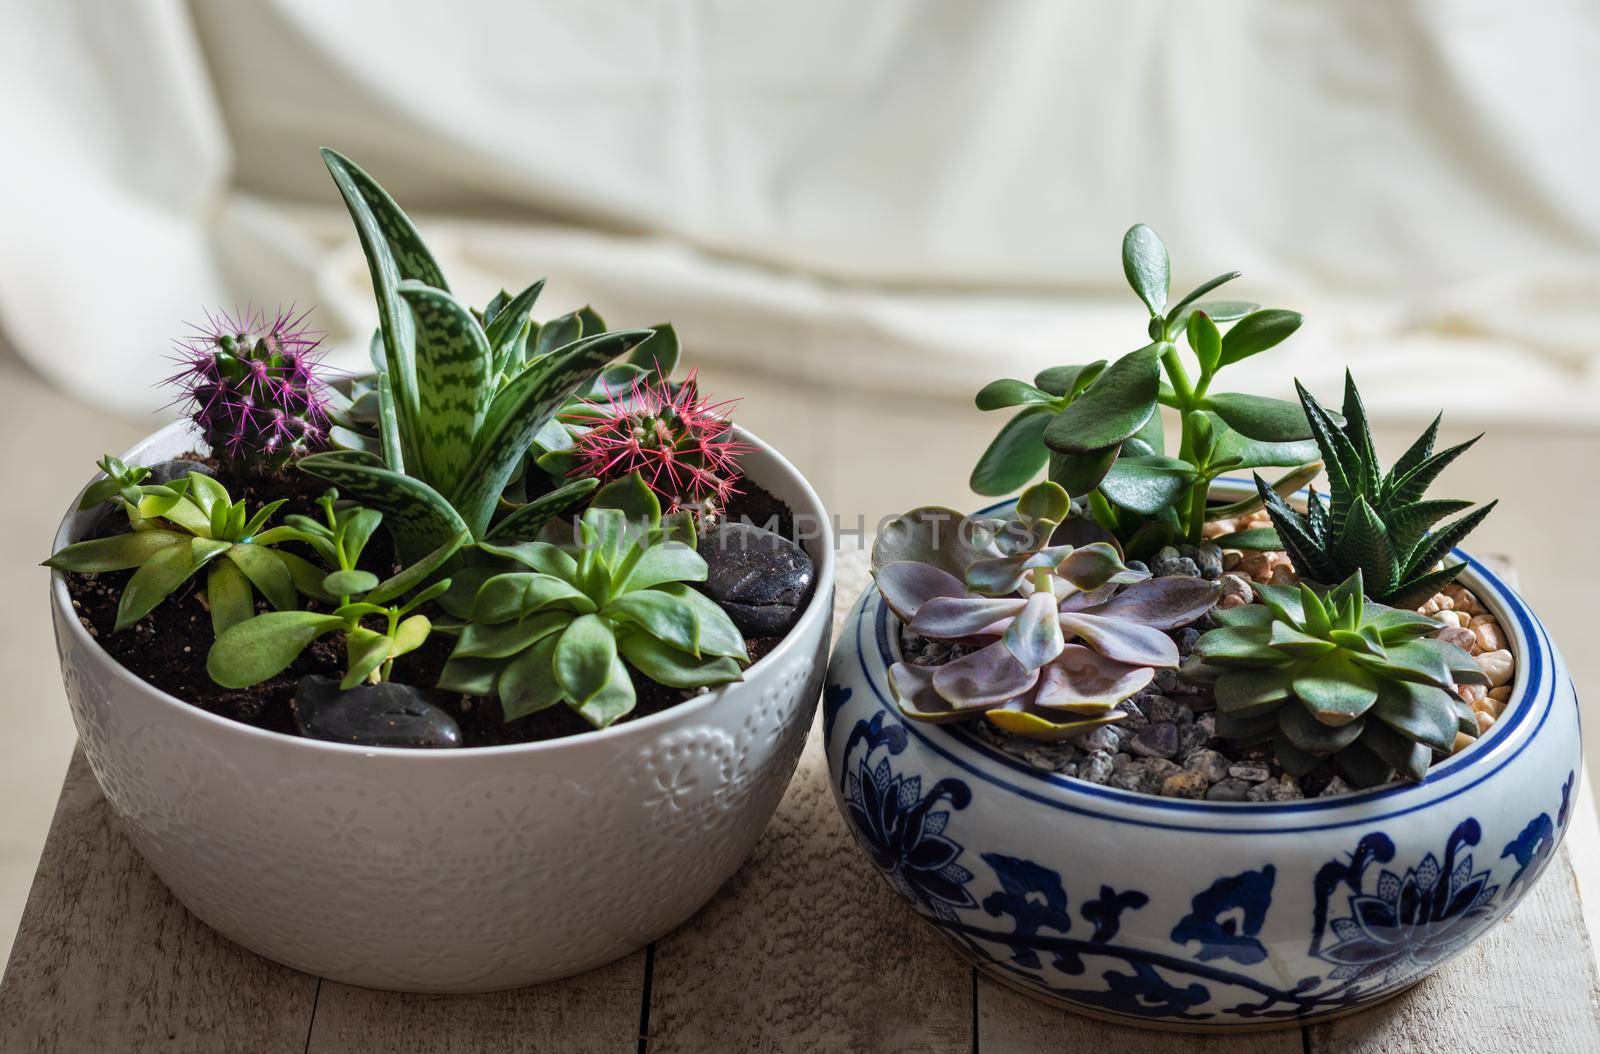 Terrarium plants in pot, with cactus, succulent close up by ferhad